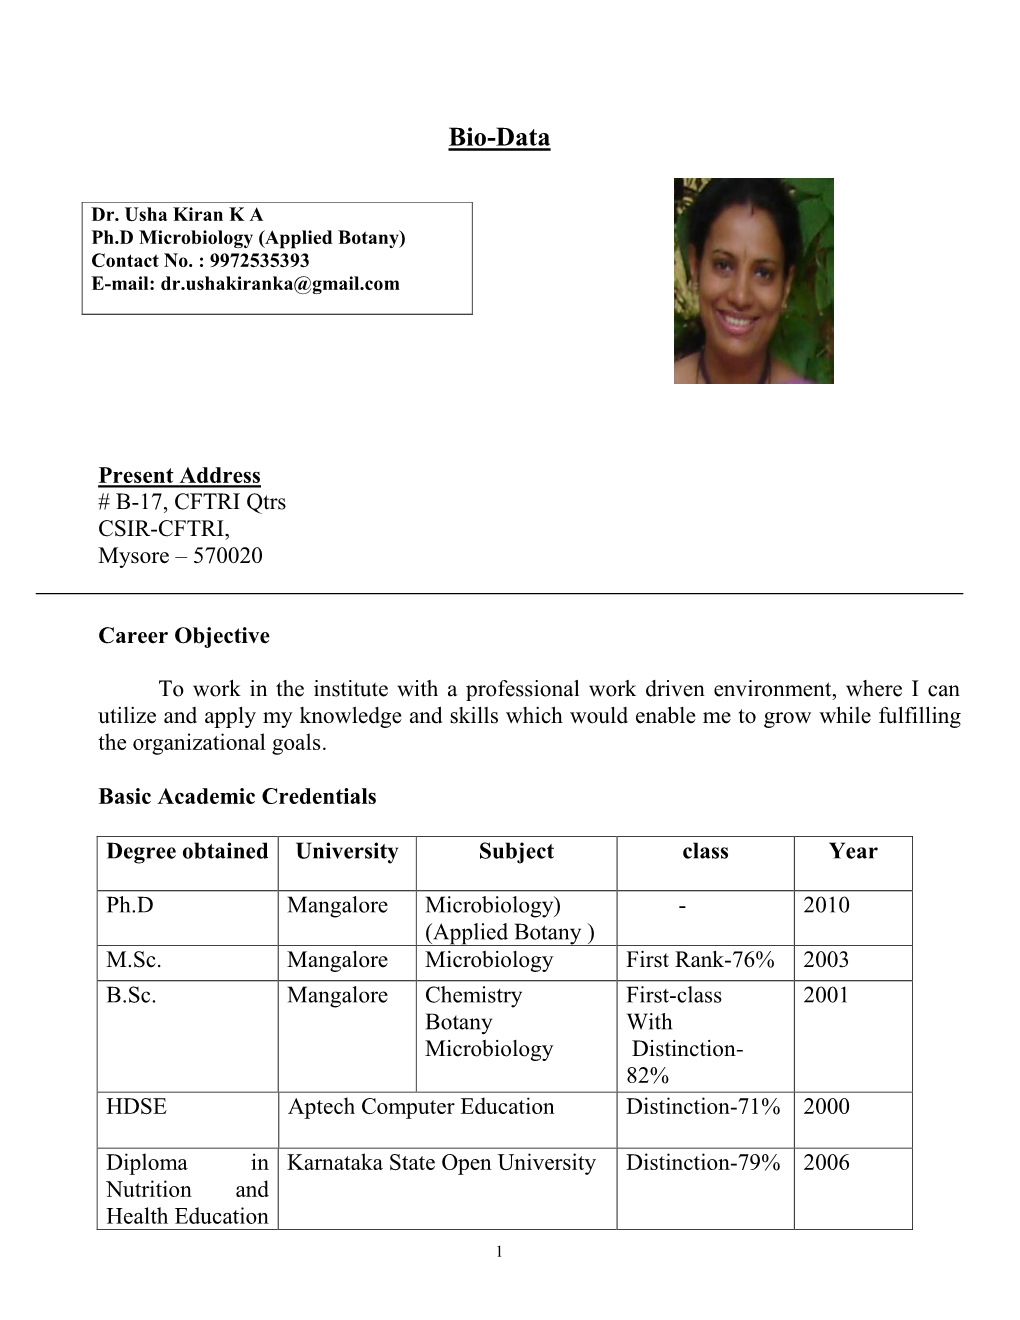 Dr. Usha Kiran KA Ph.D Microbiology (Applied Botany) Contact